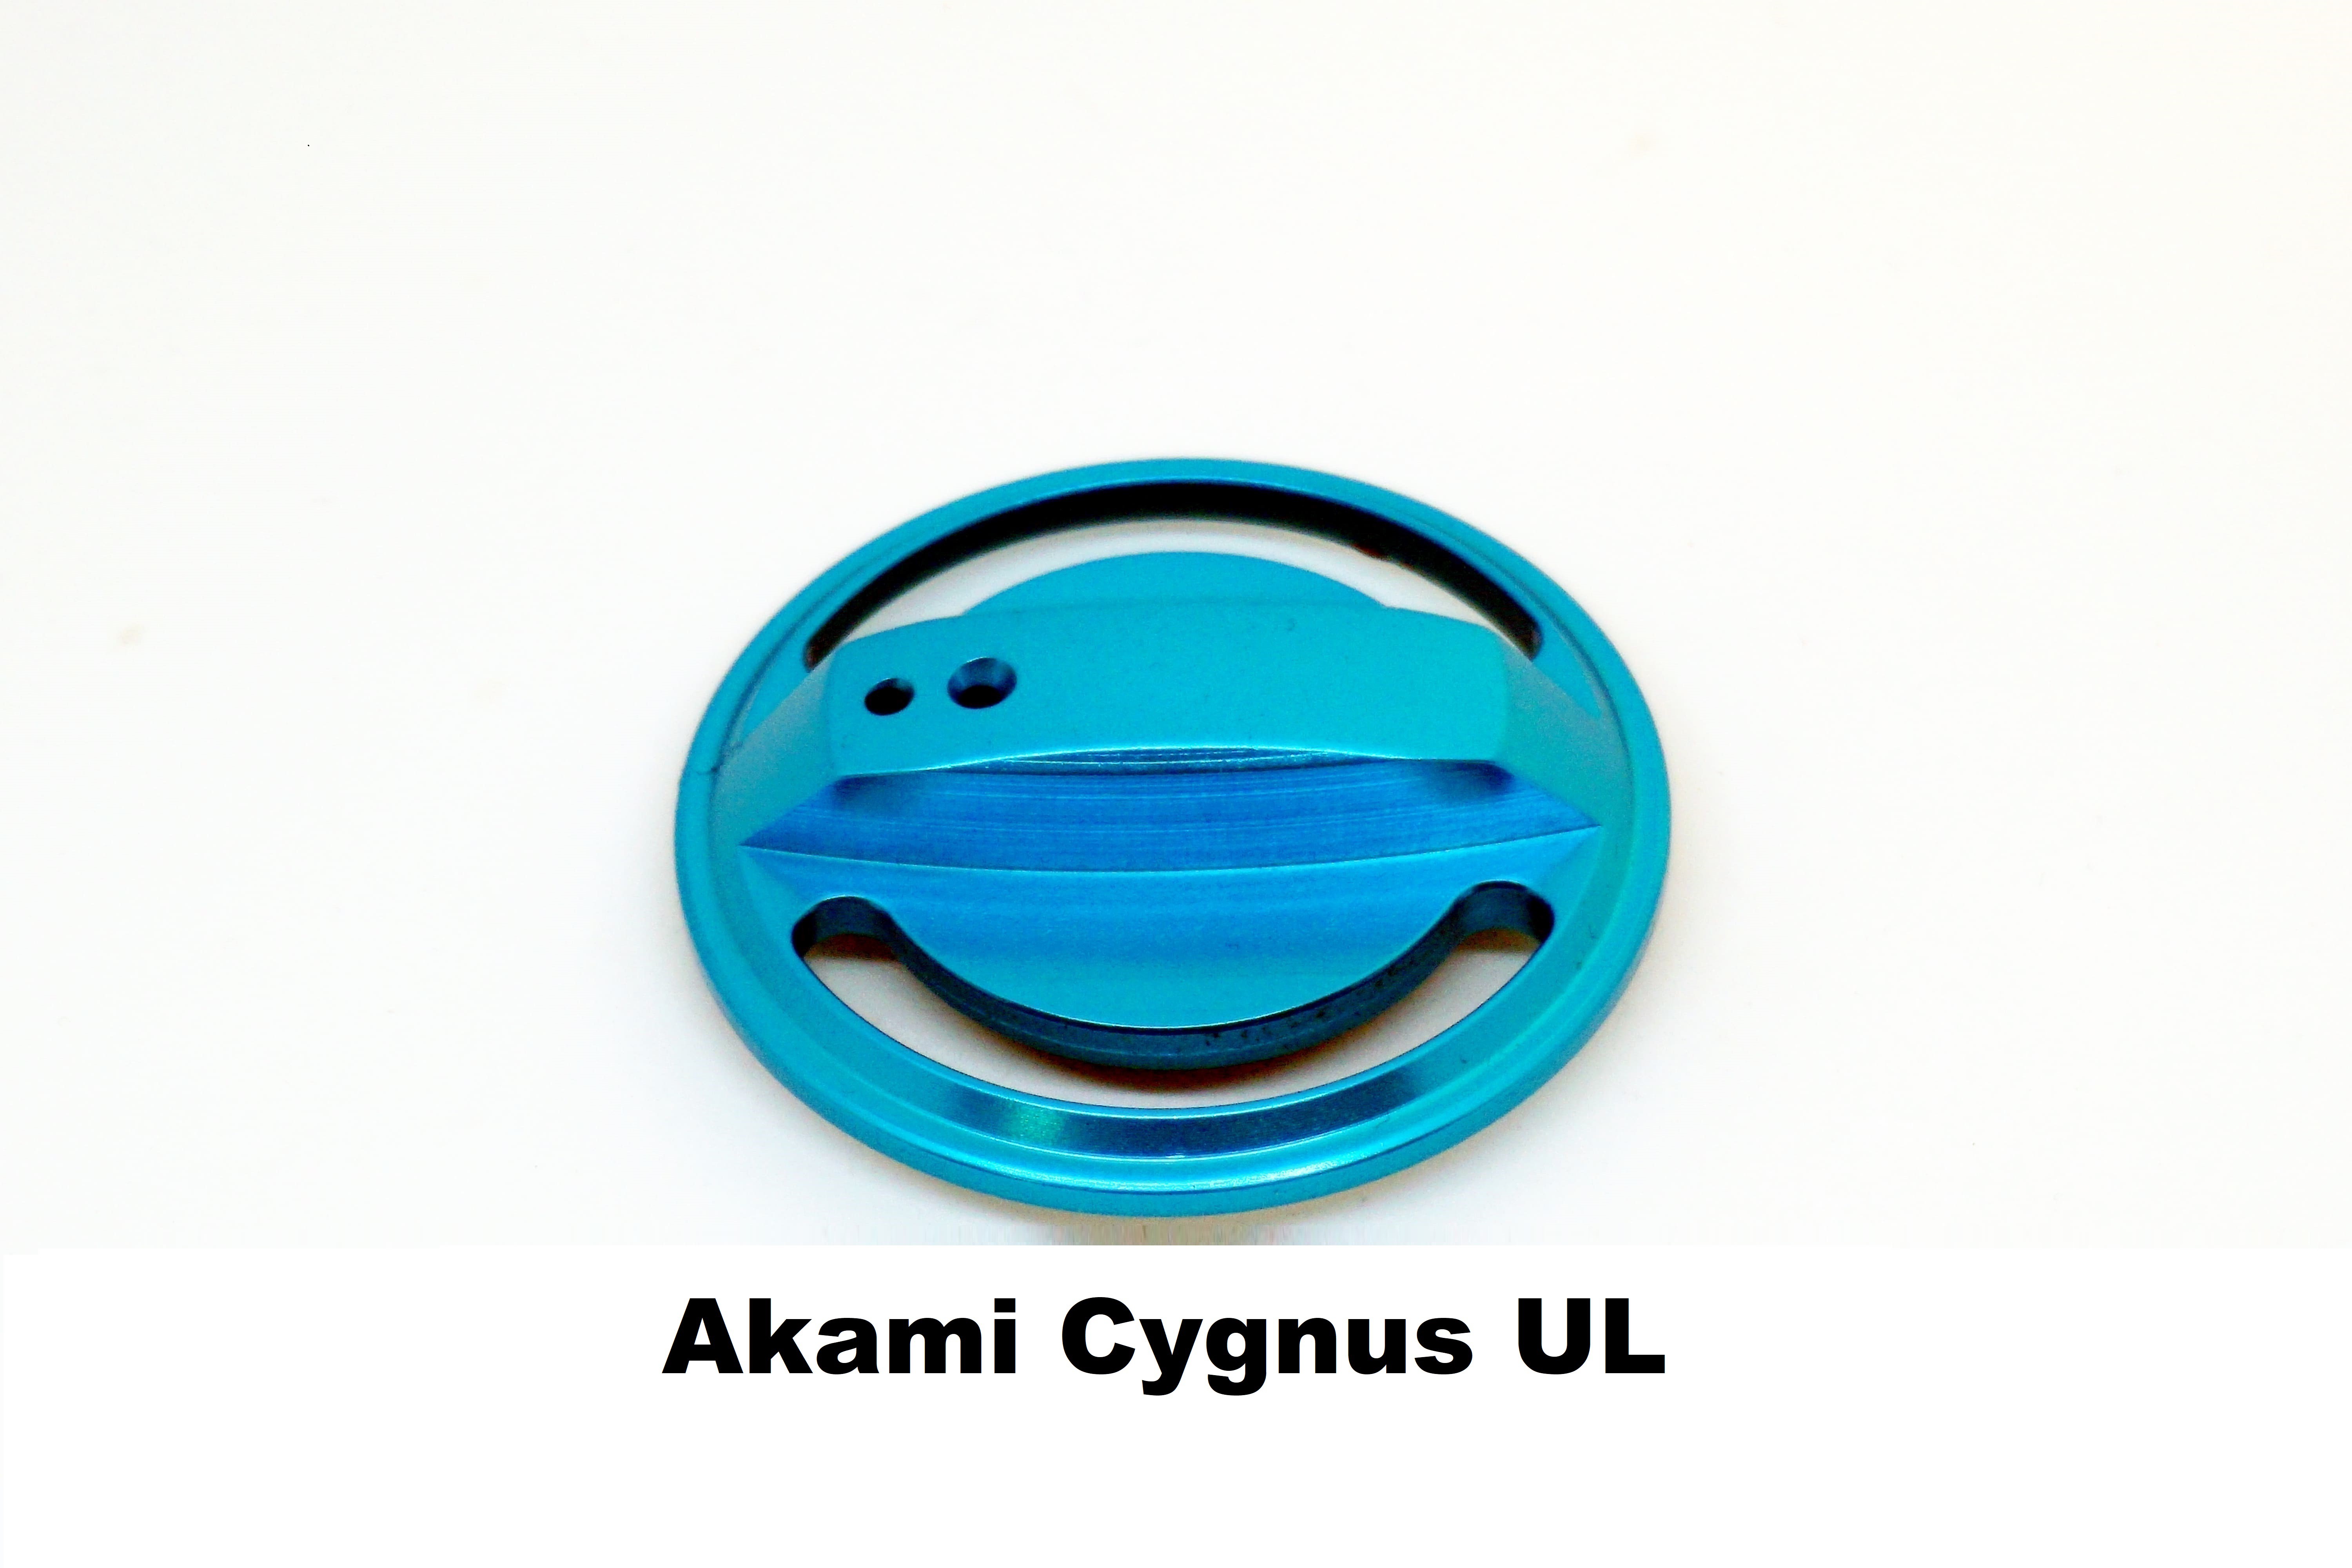 Drag Knob for Akami Cygnus UL